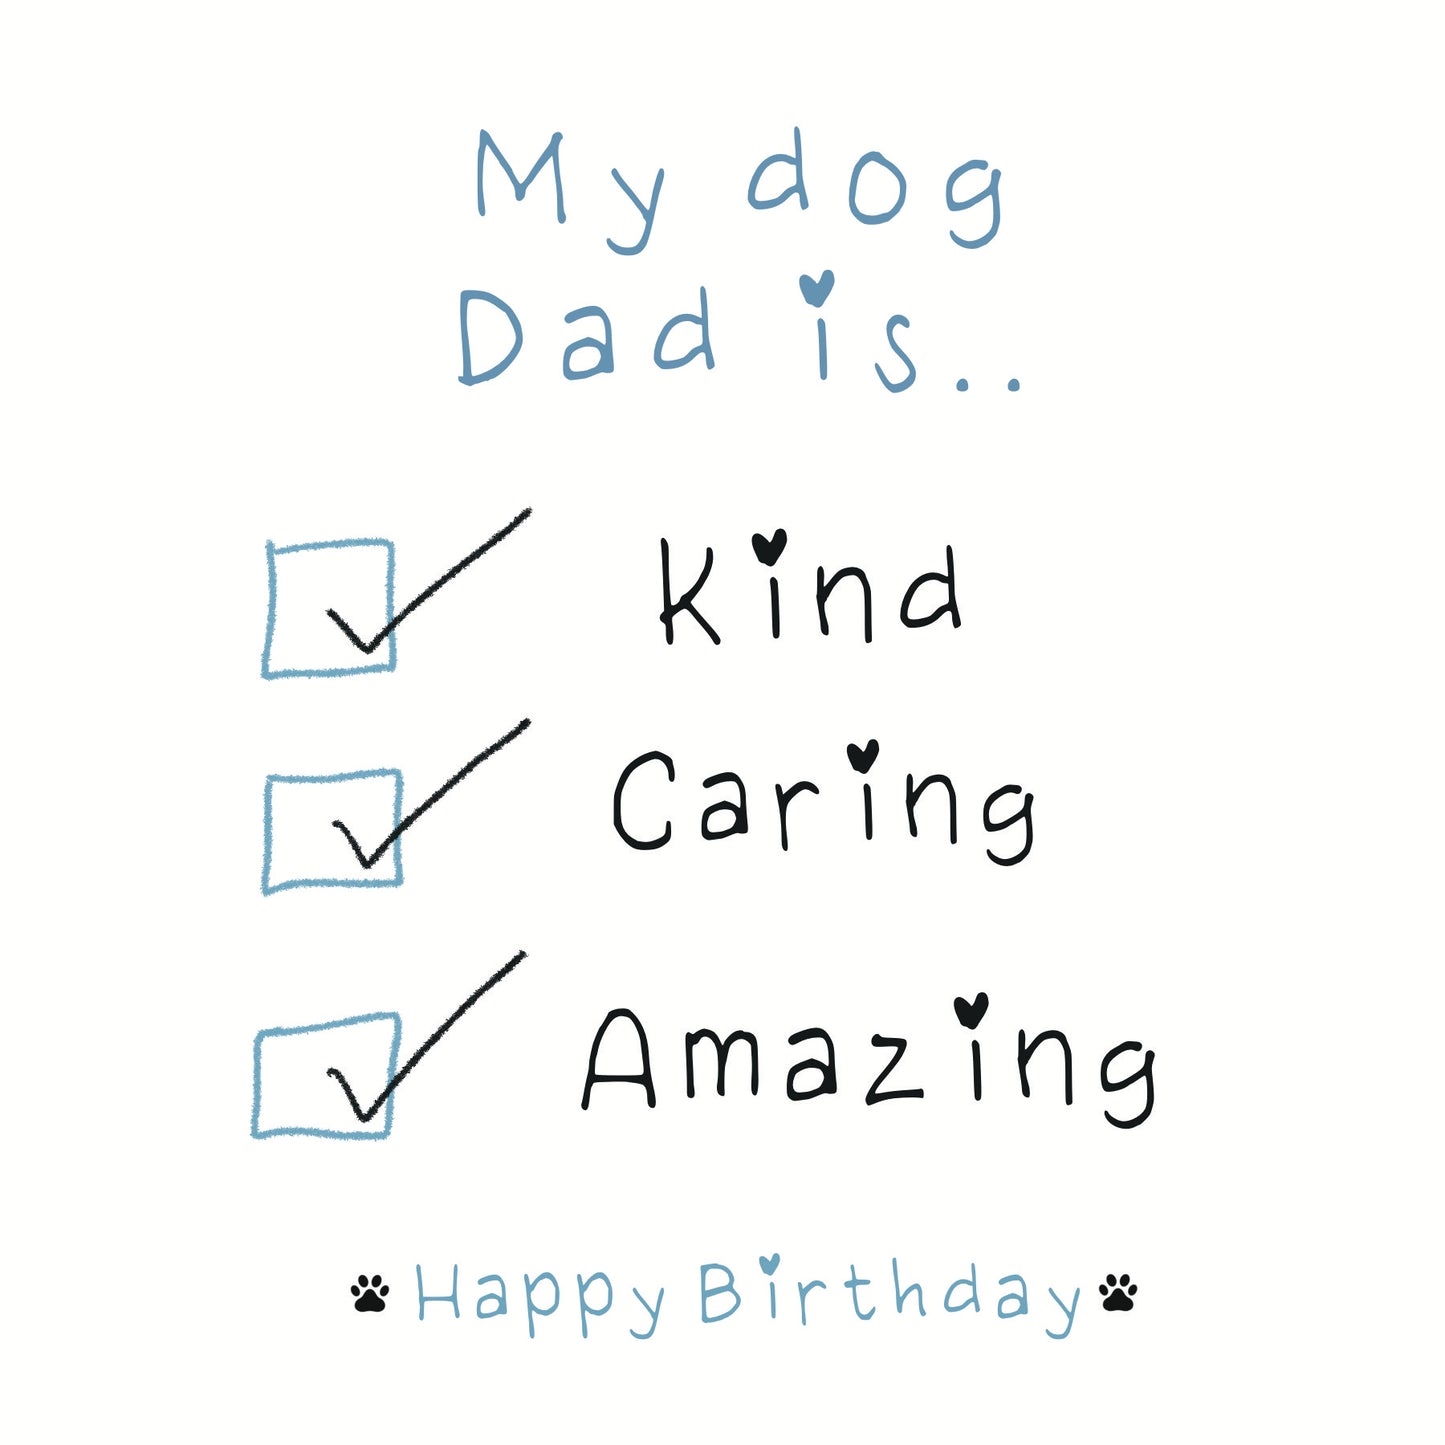 My dog dad is…card